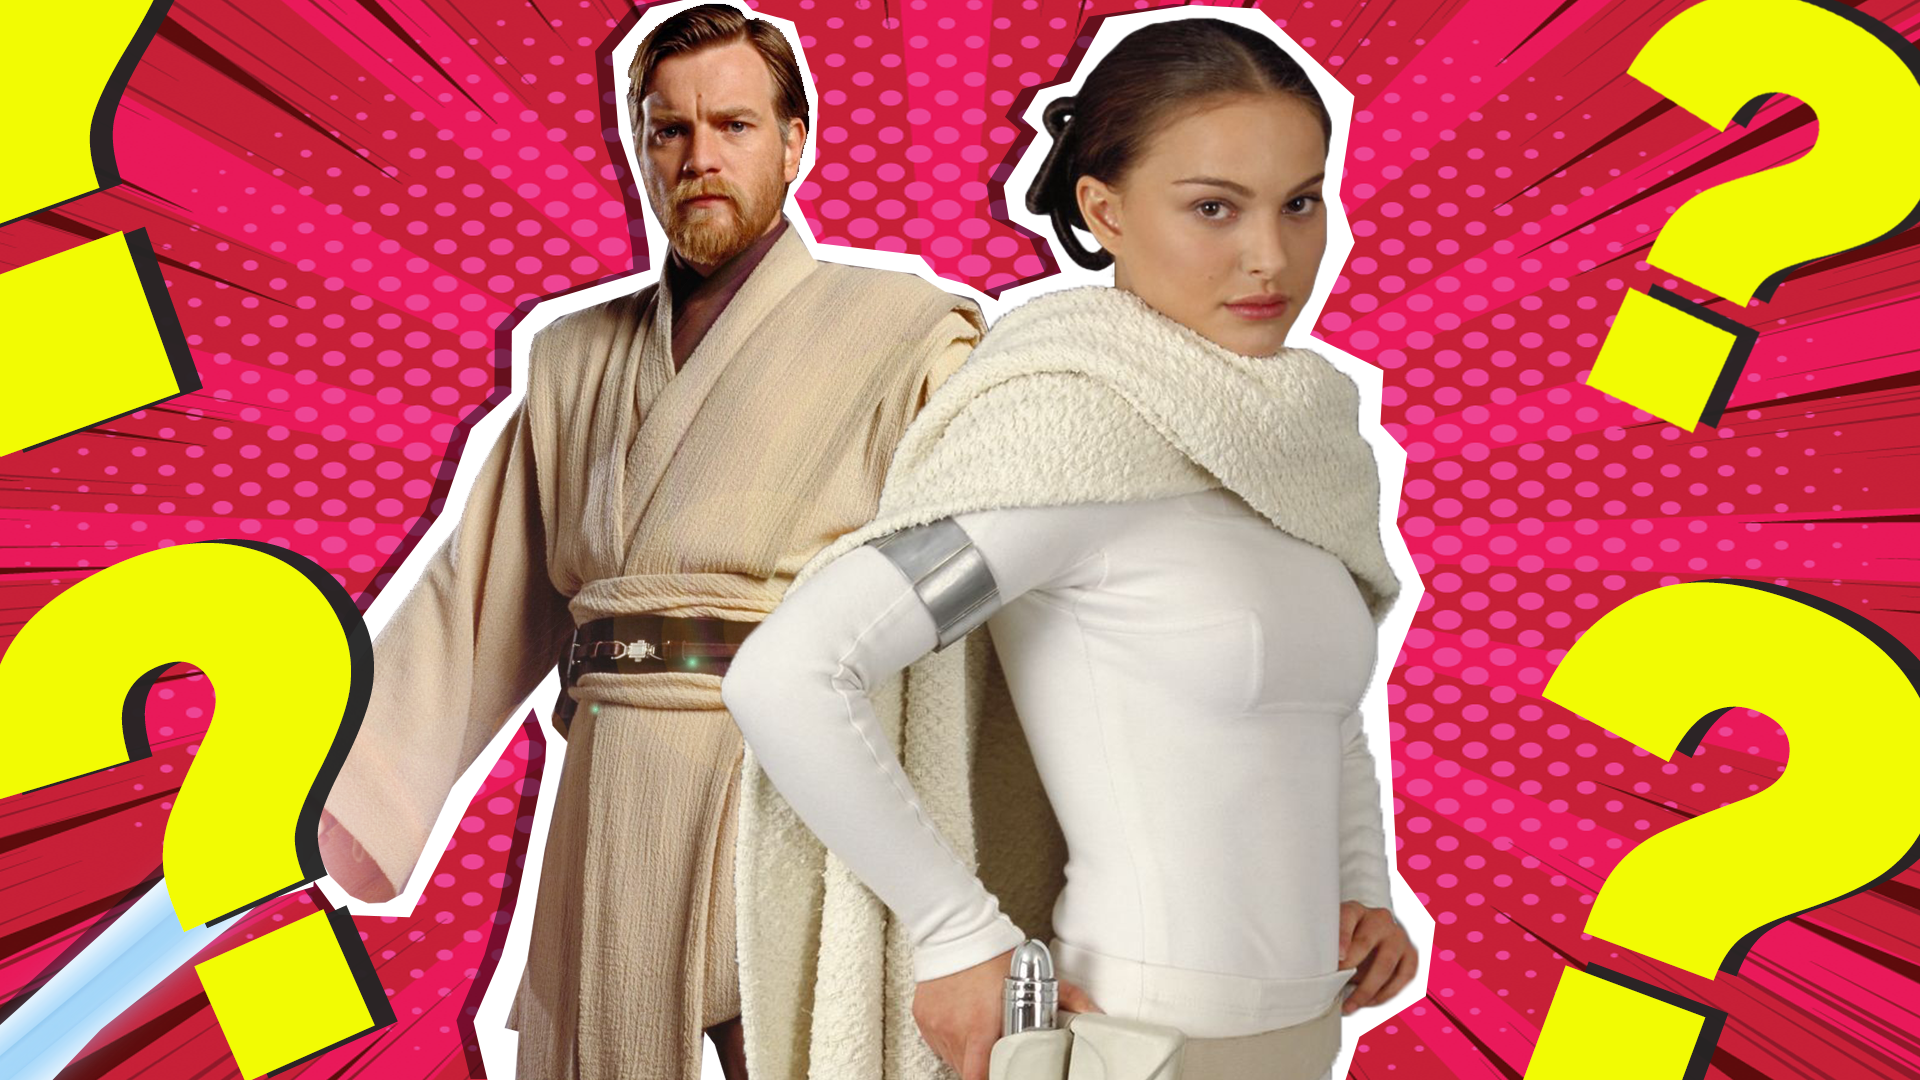 Obi-Wan Kenobi and Queen Amidala